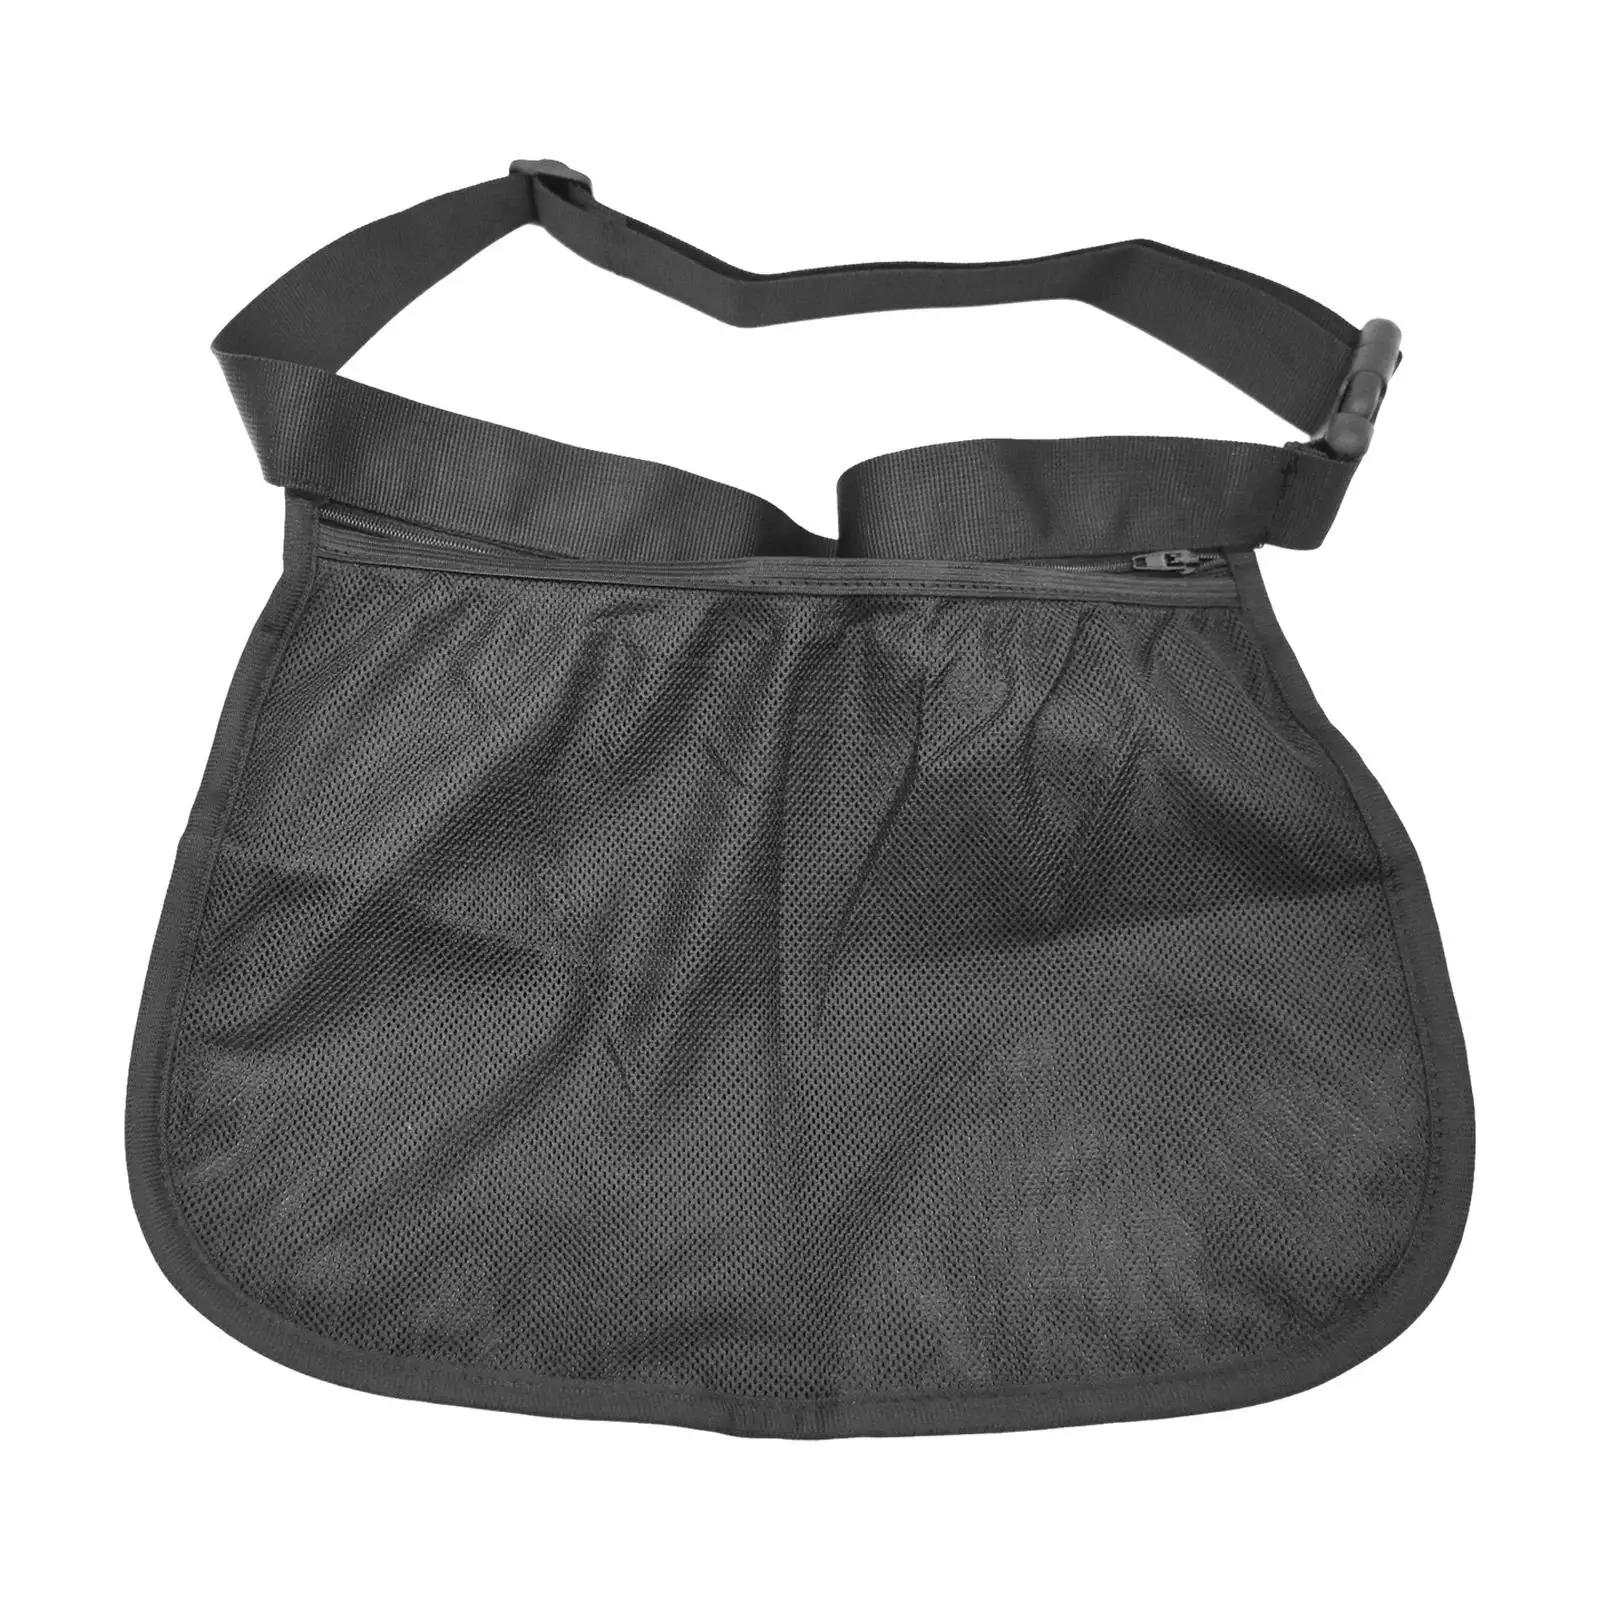 Black Tennis Ball Holder Waist Hip Bag Waist Pocket Outdoor Ball Storage Bag for Storing Balls and Phones Fitness Exercise